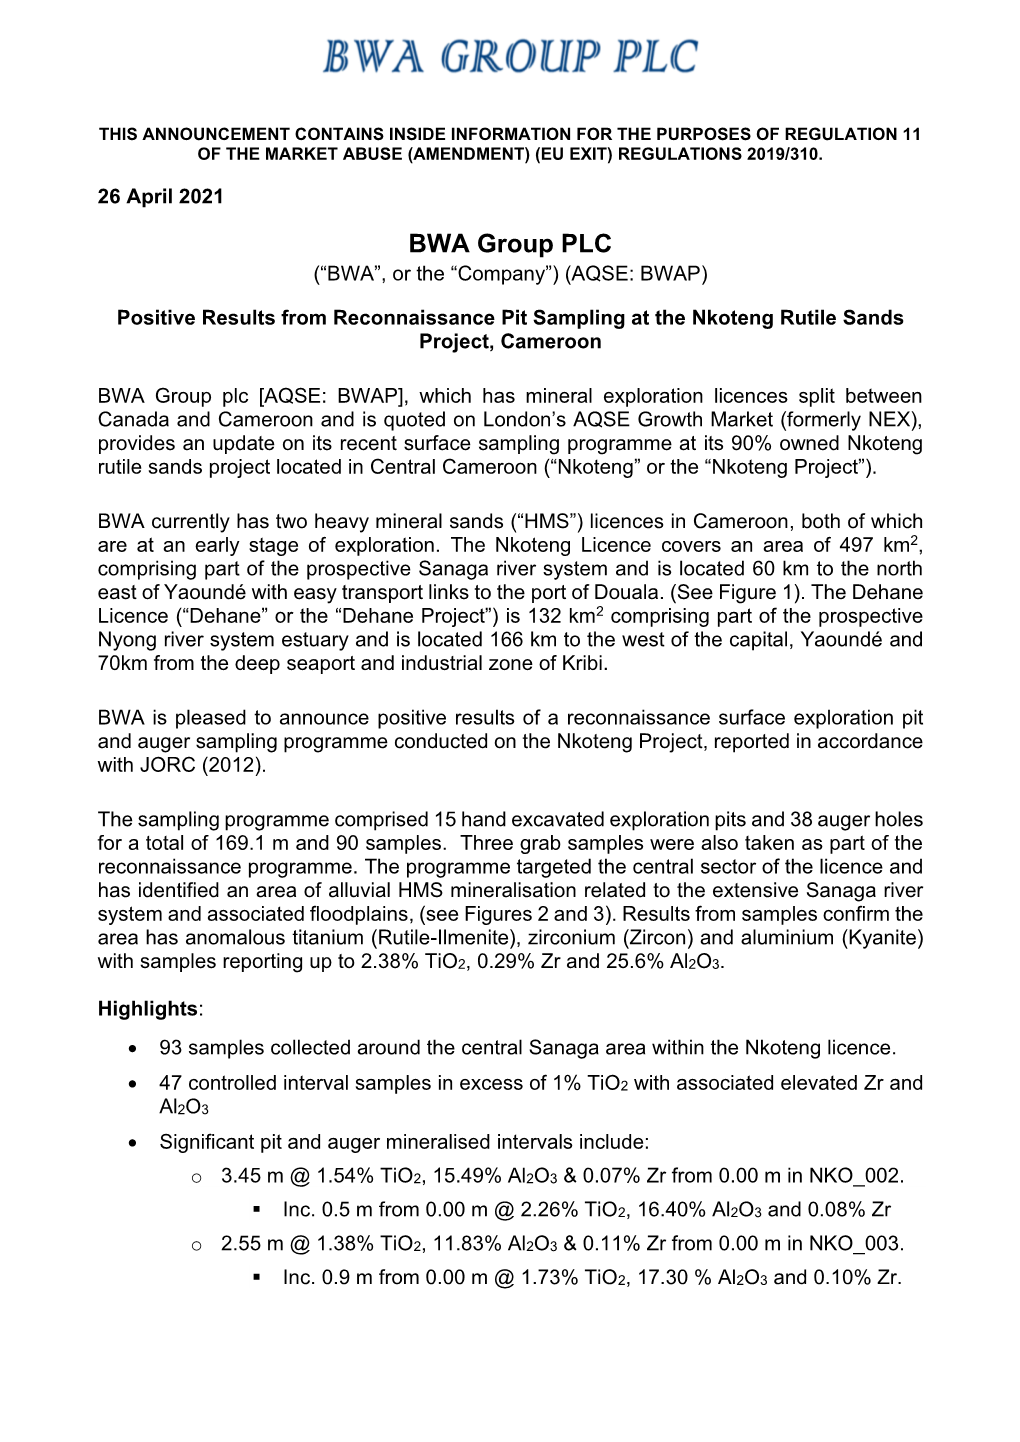 BWA Group PLC (“BWA”, Or the “Company”) (AQSE: BWAP)